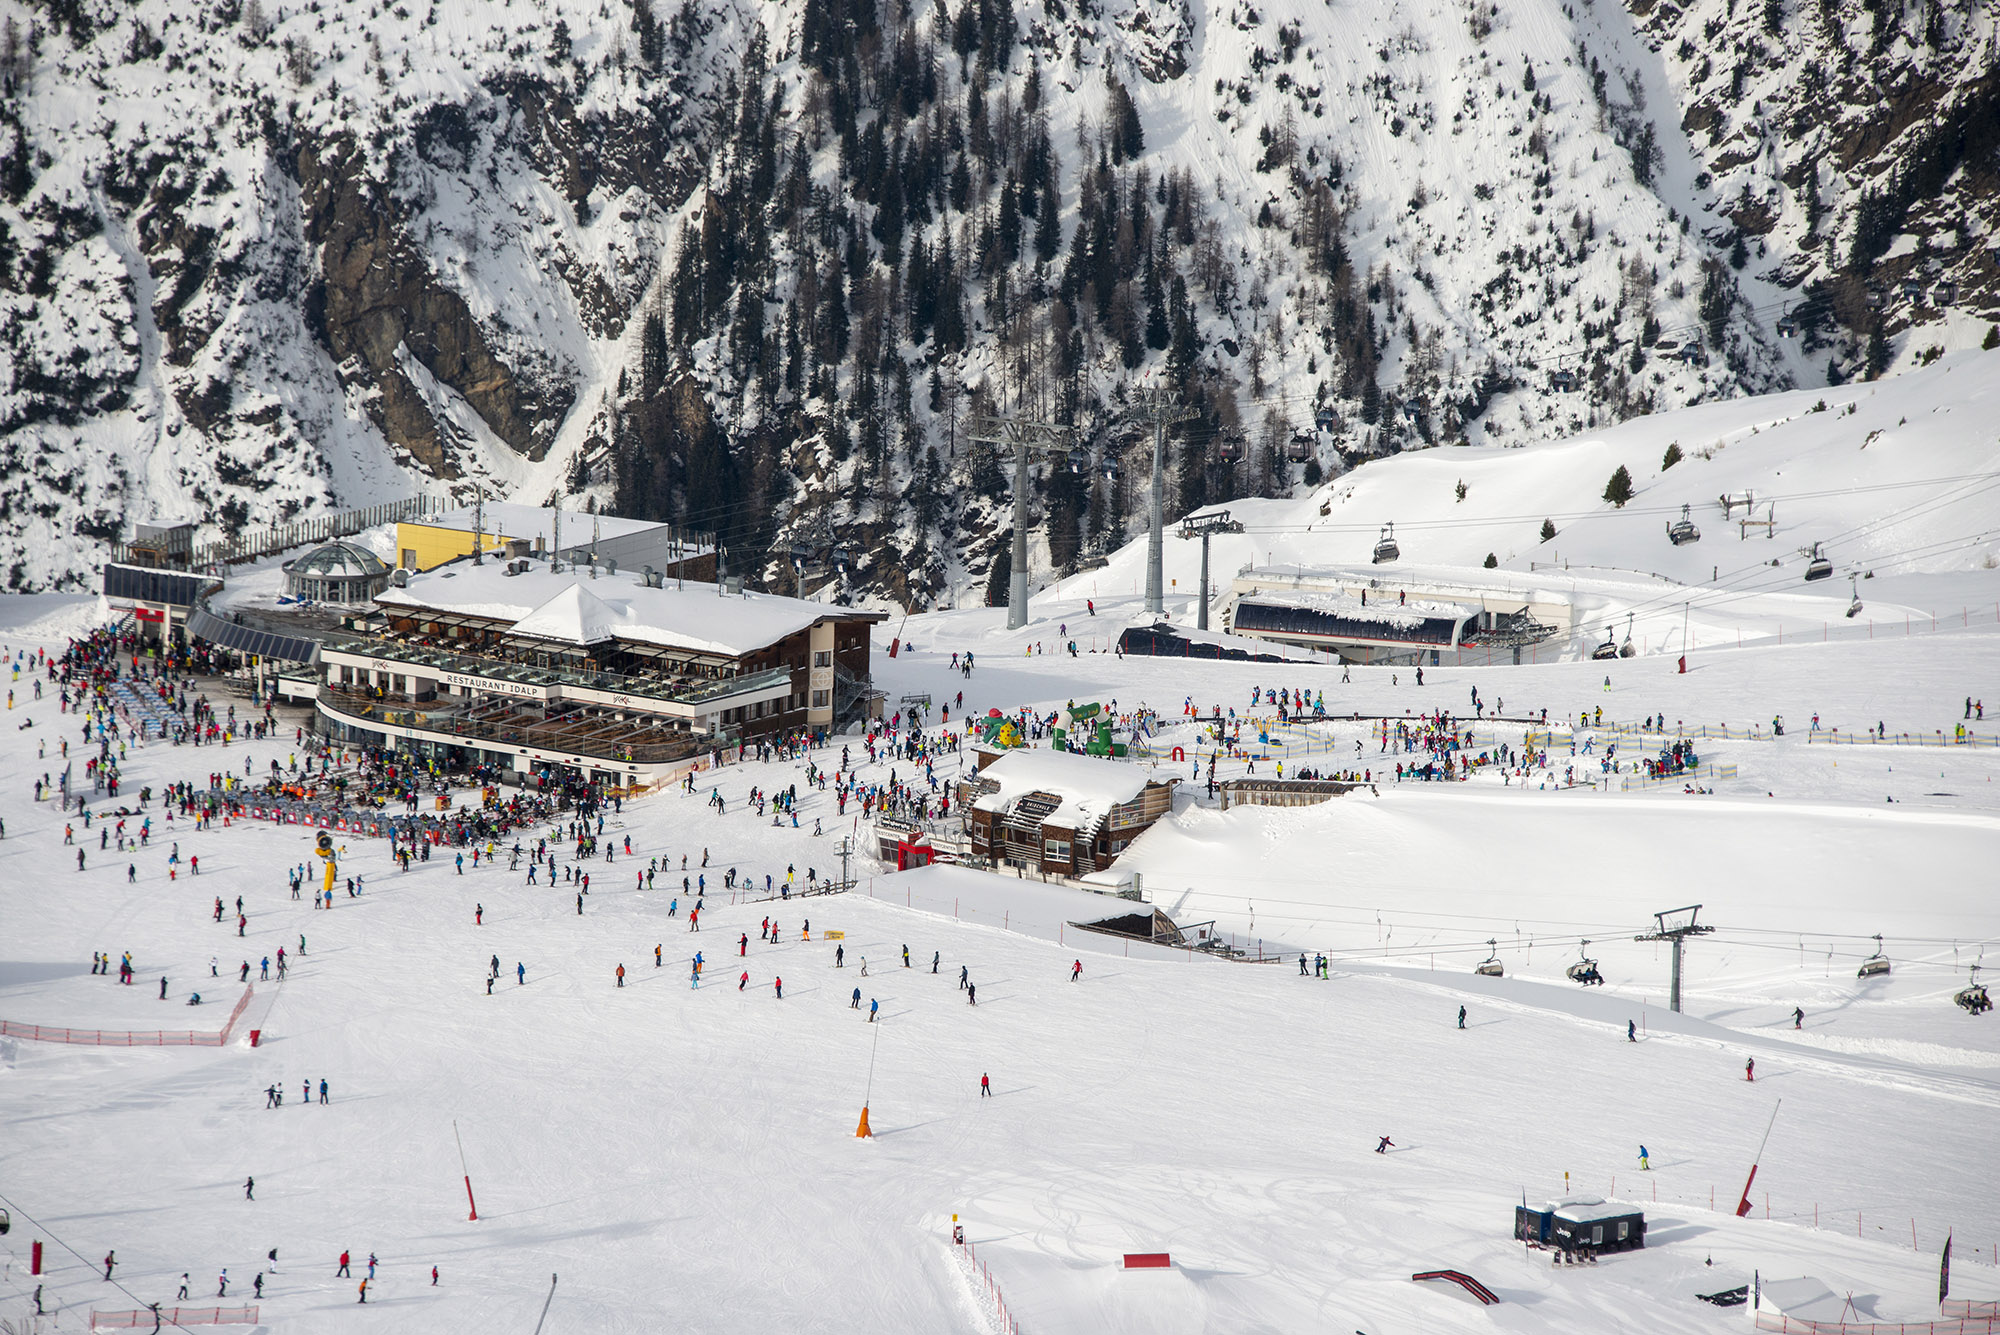 Ischgl Silvretta Arena Ski resort, Austria/Switzerland